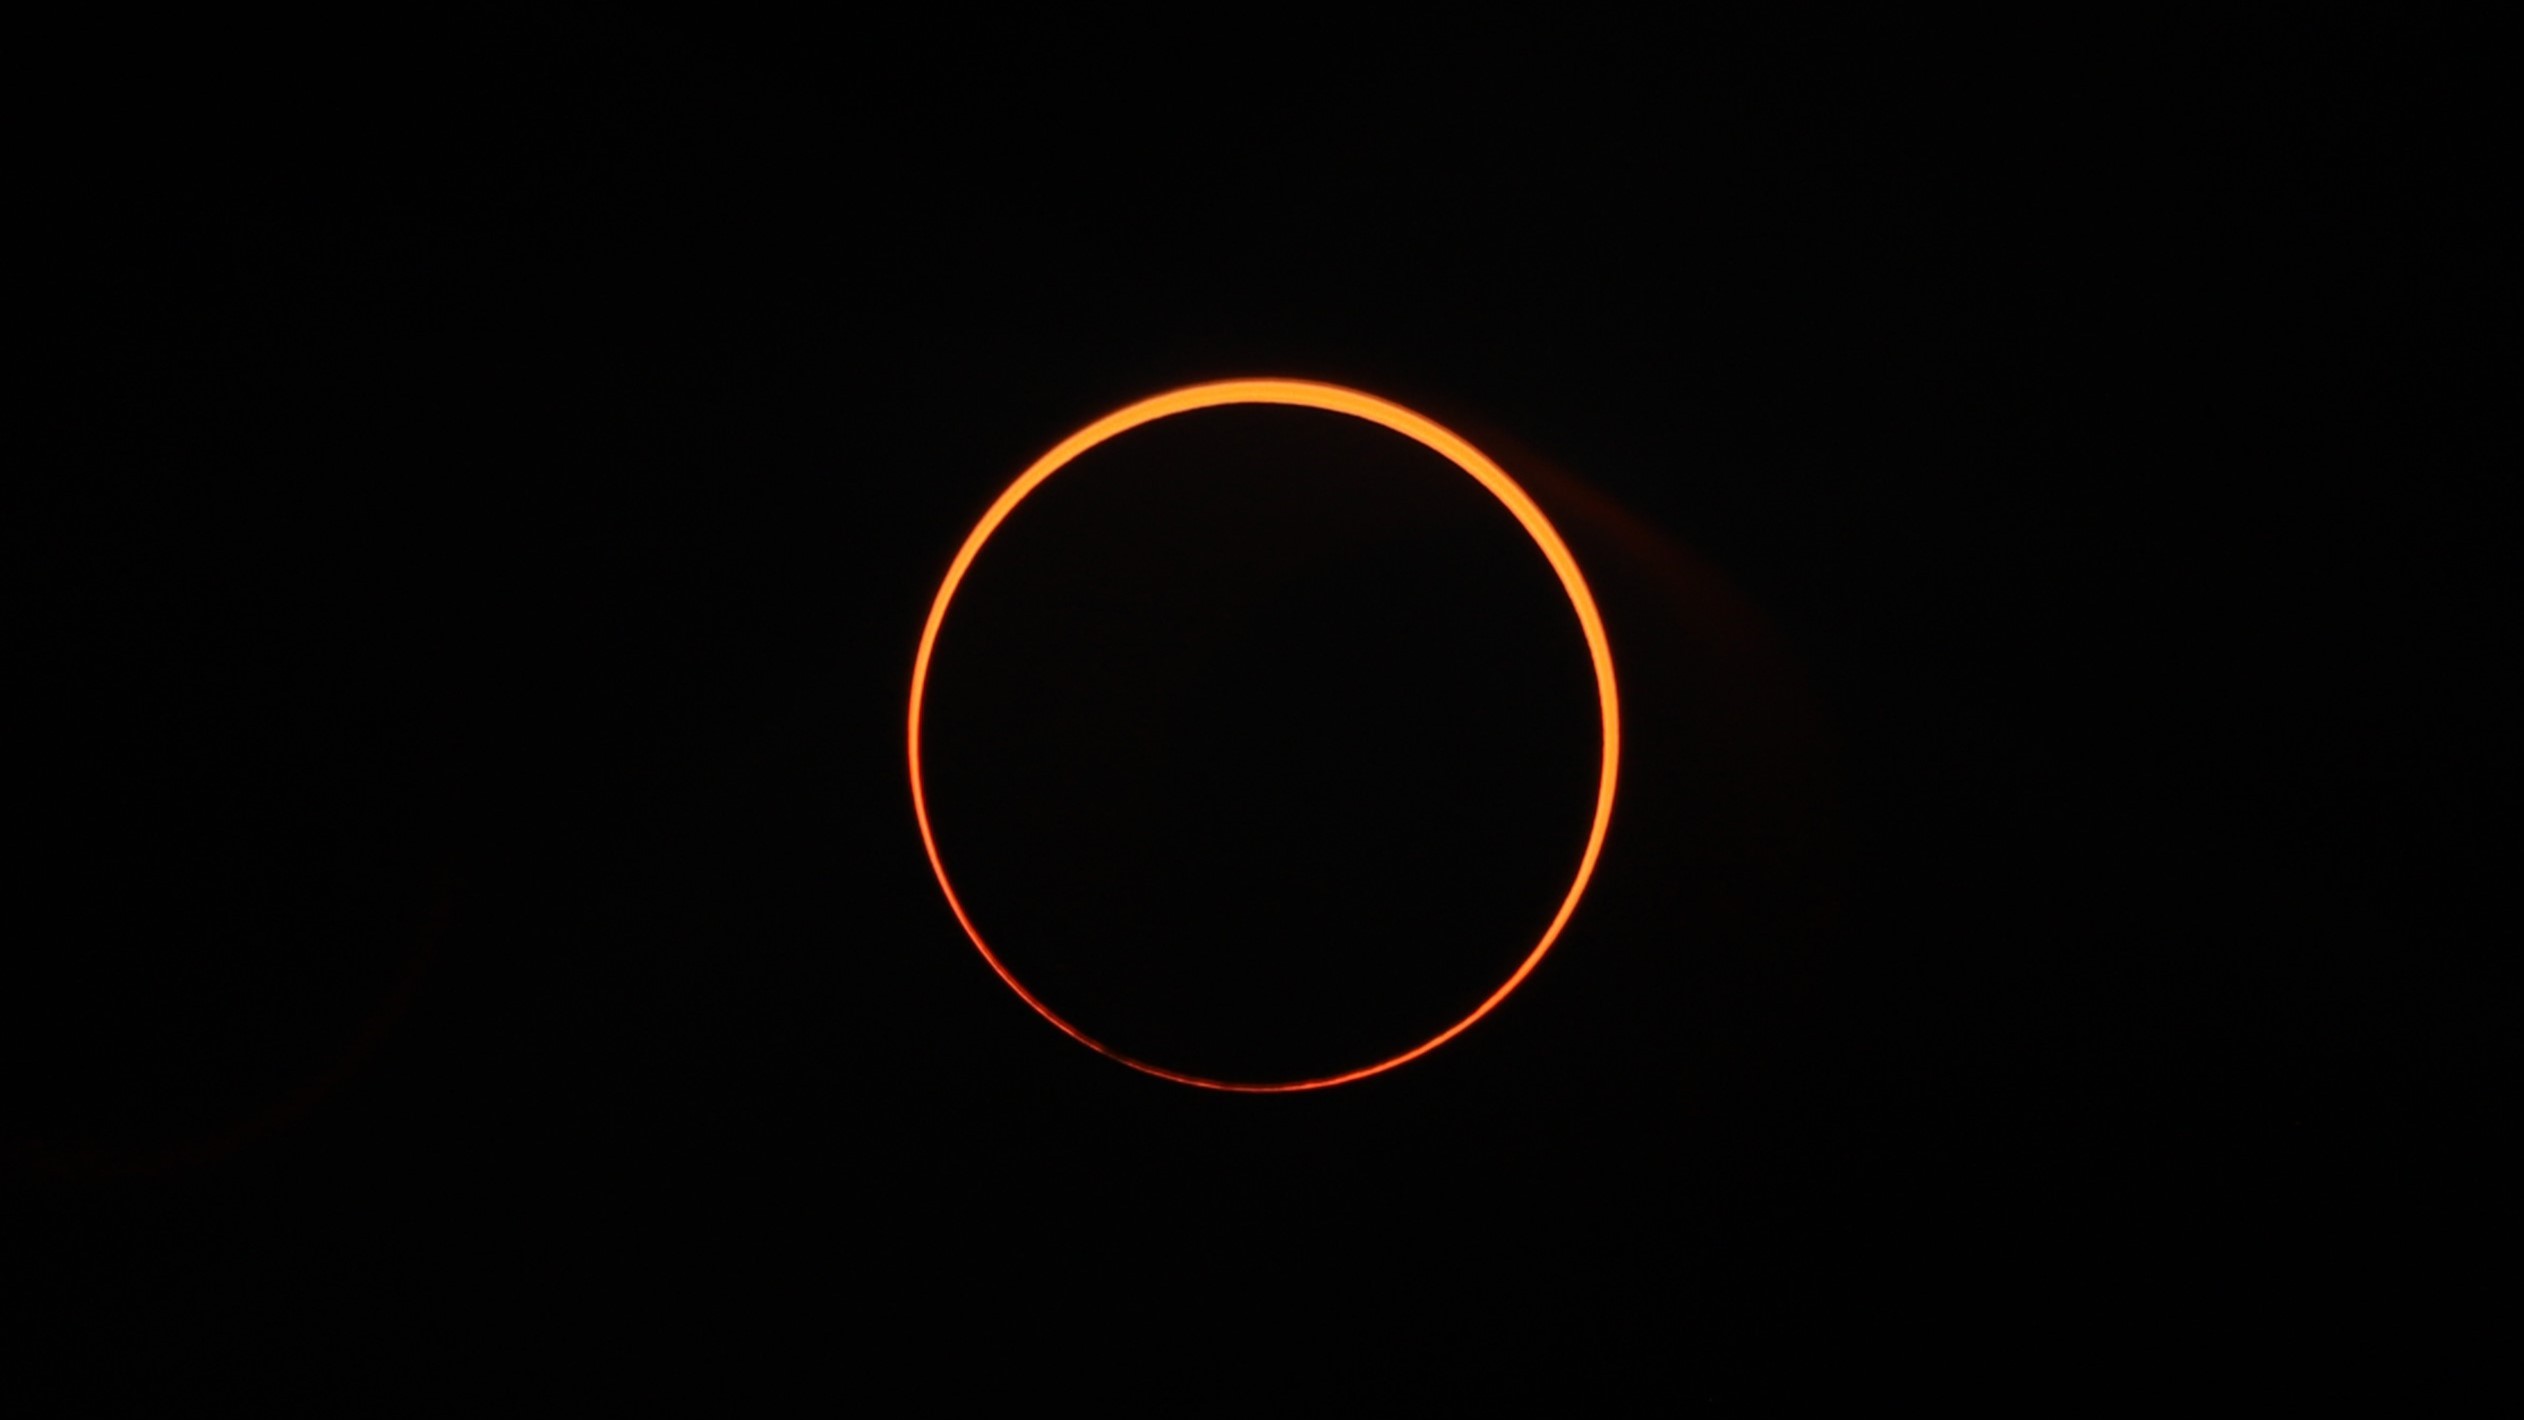 sun appears as an orange ring against a black sky.